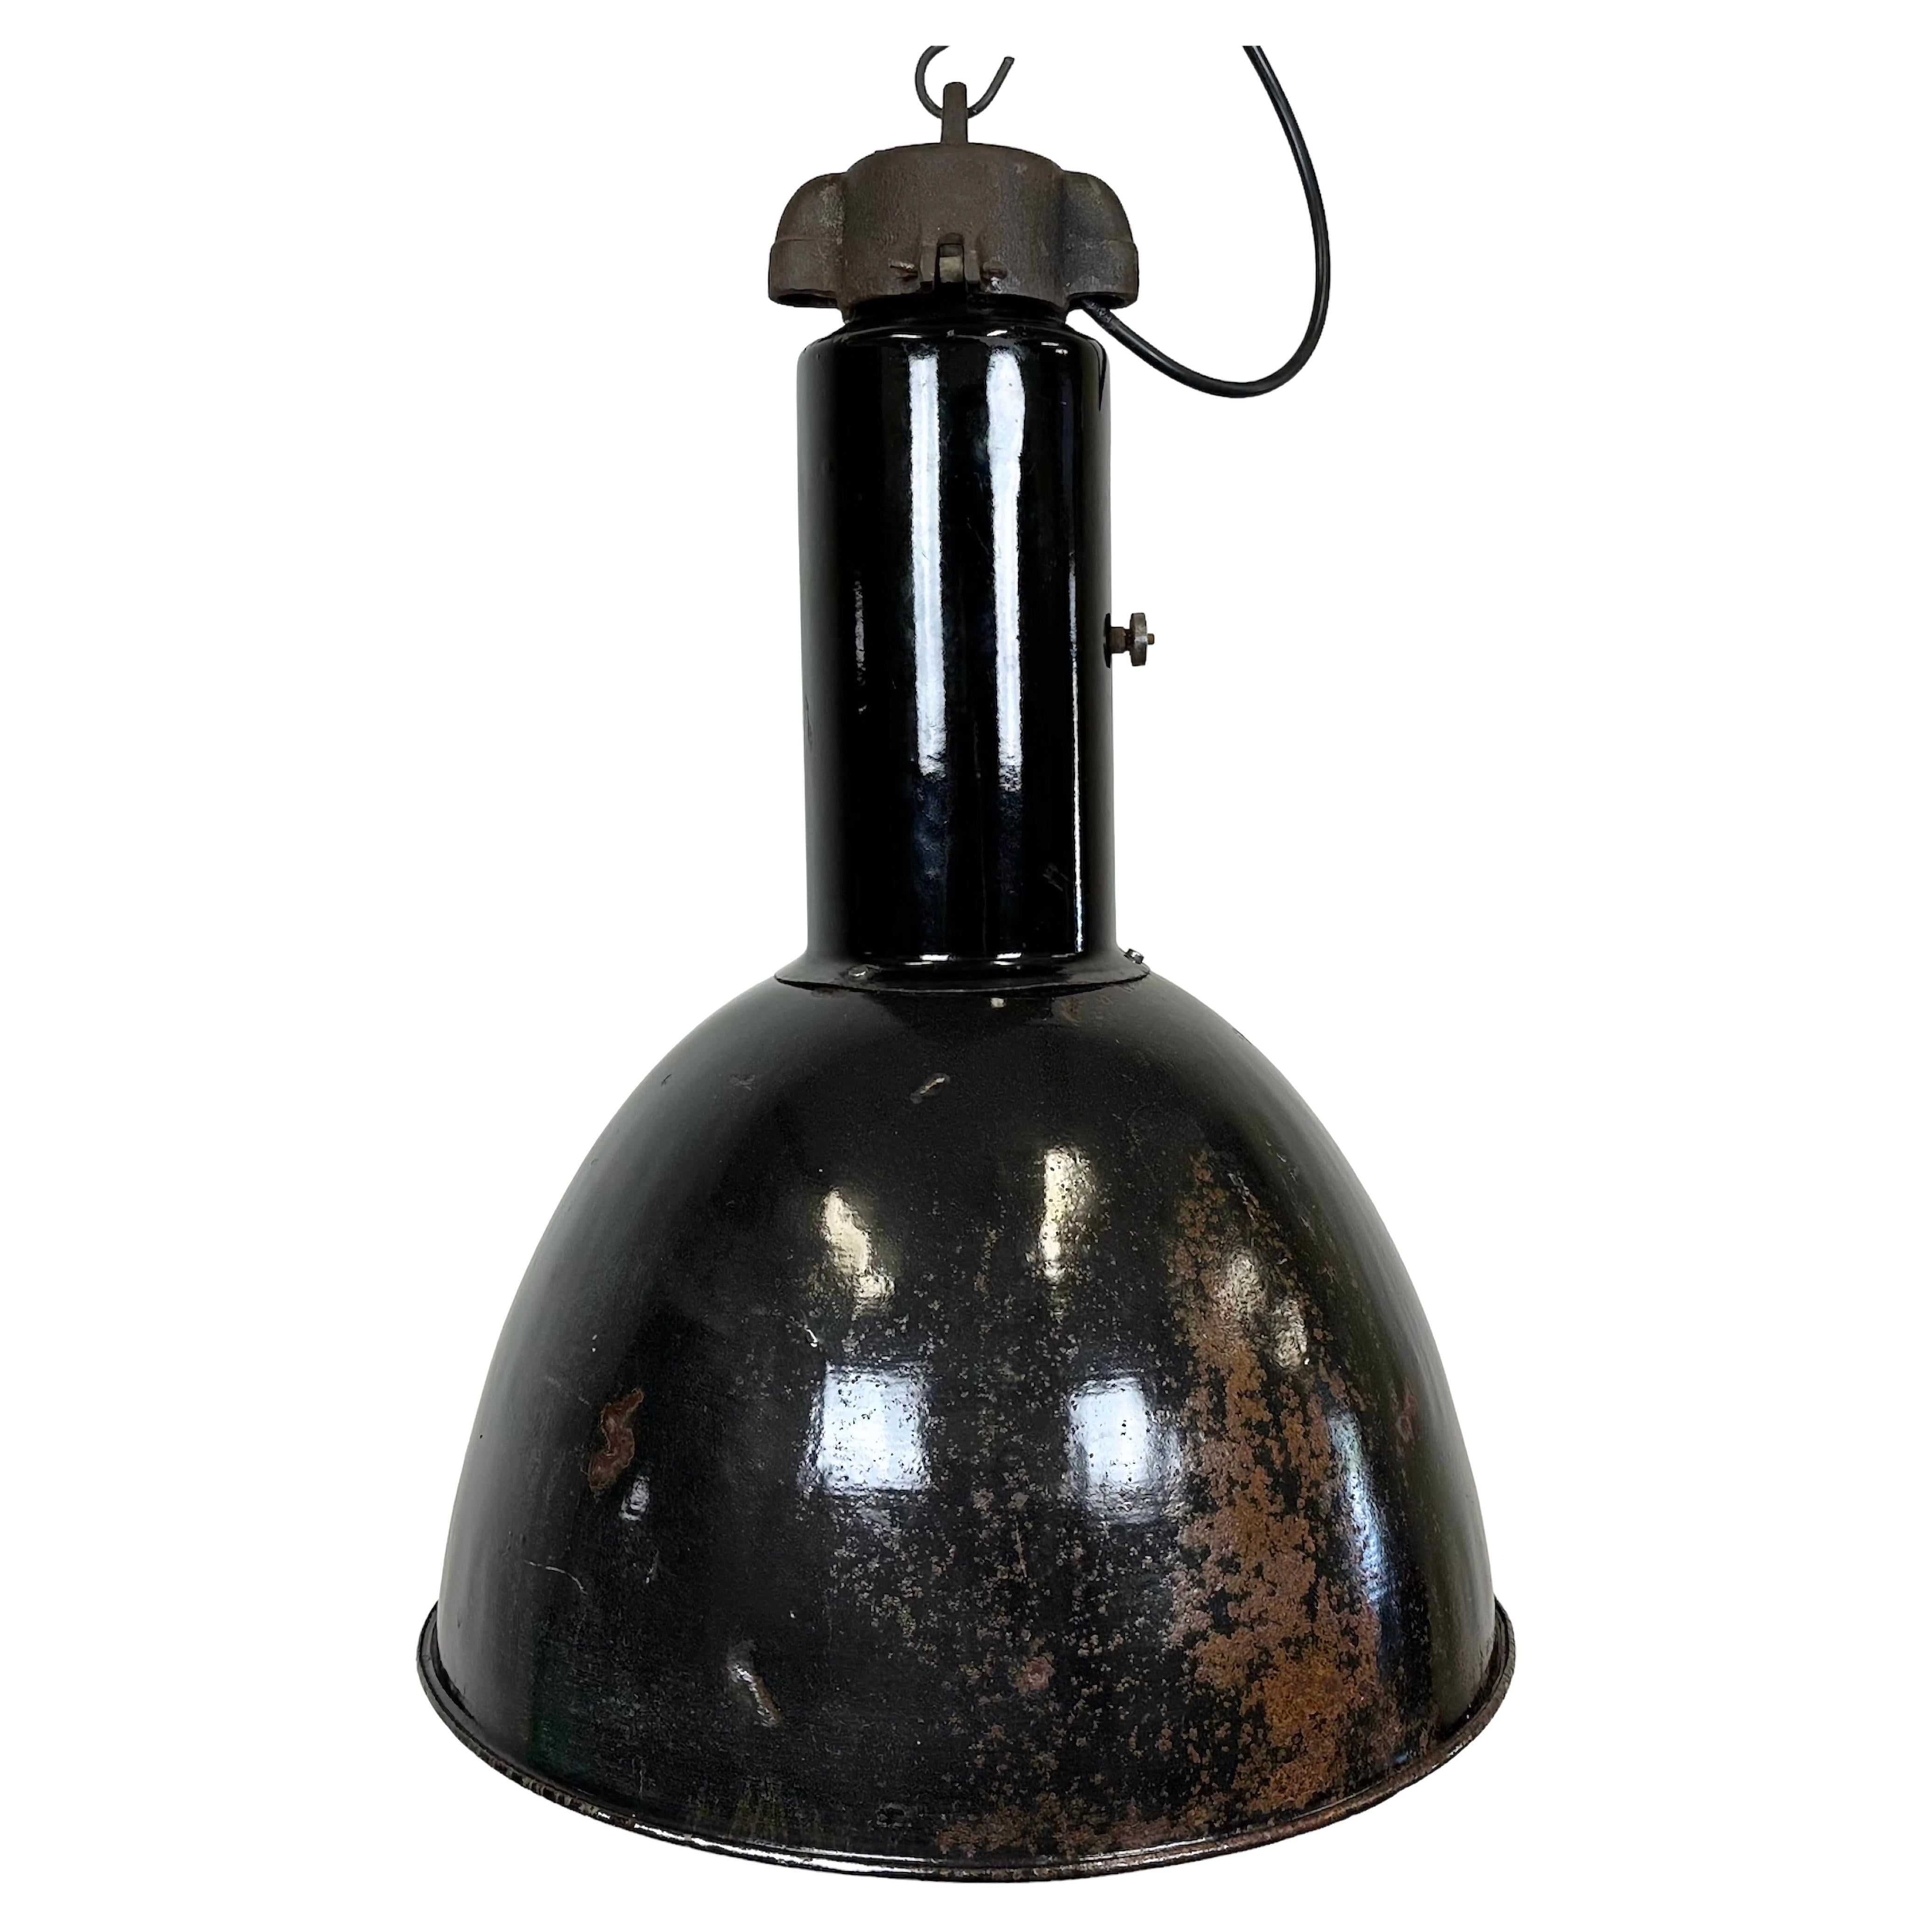 Rusty Industrial Bauhaus Black Enamel Pendant Lamp, 1930s